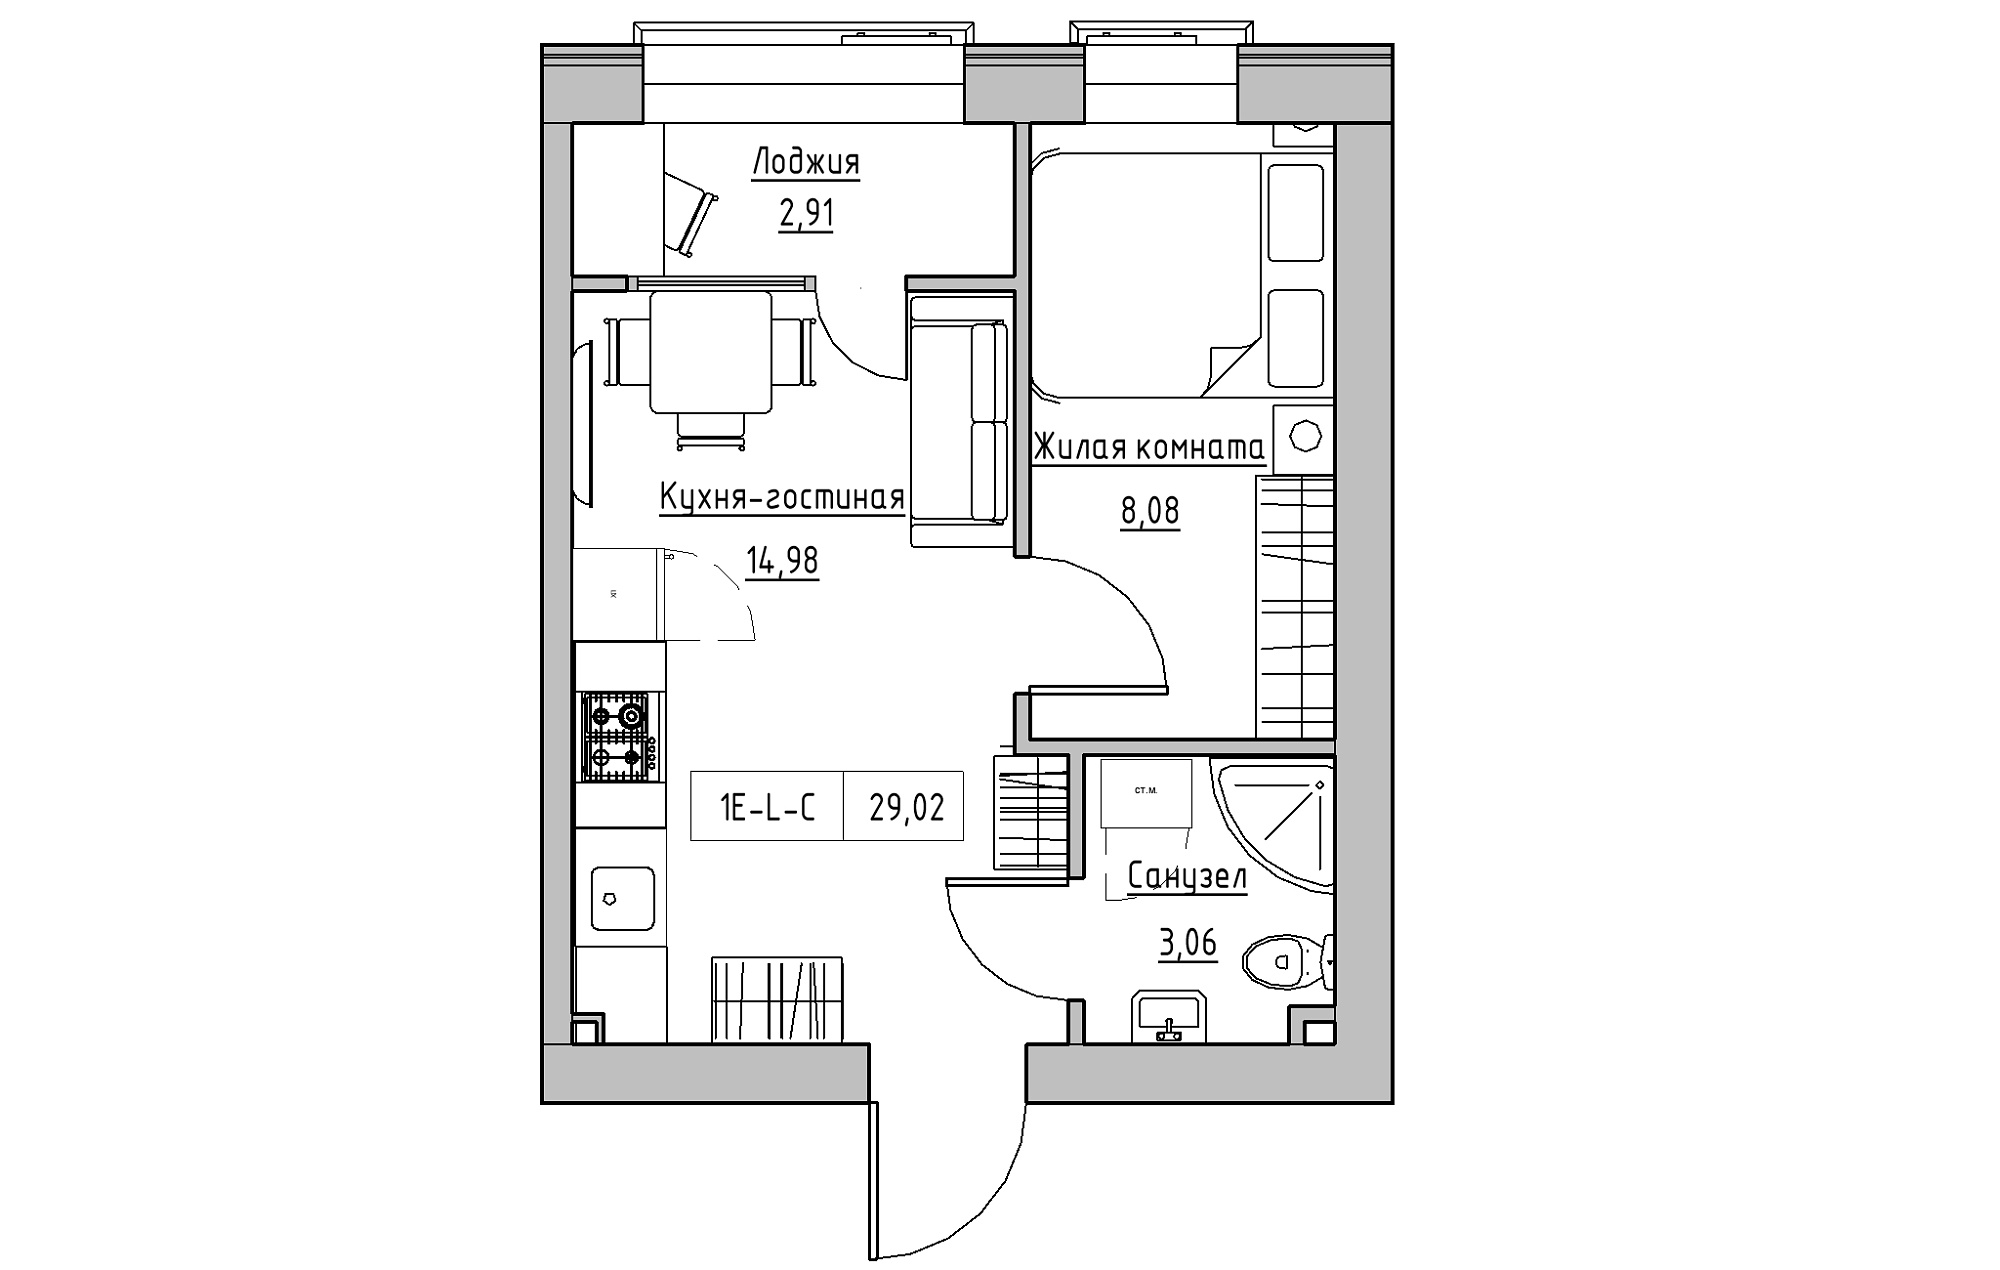 Planning 1-rm flats area 29.01m2, KS-018-03/0007.